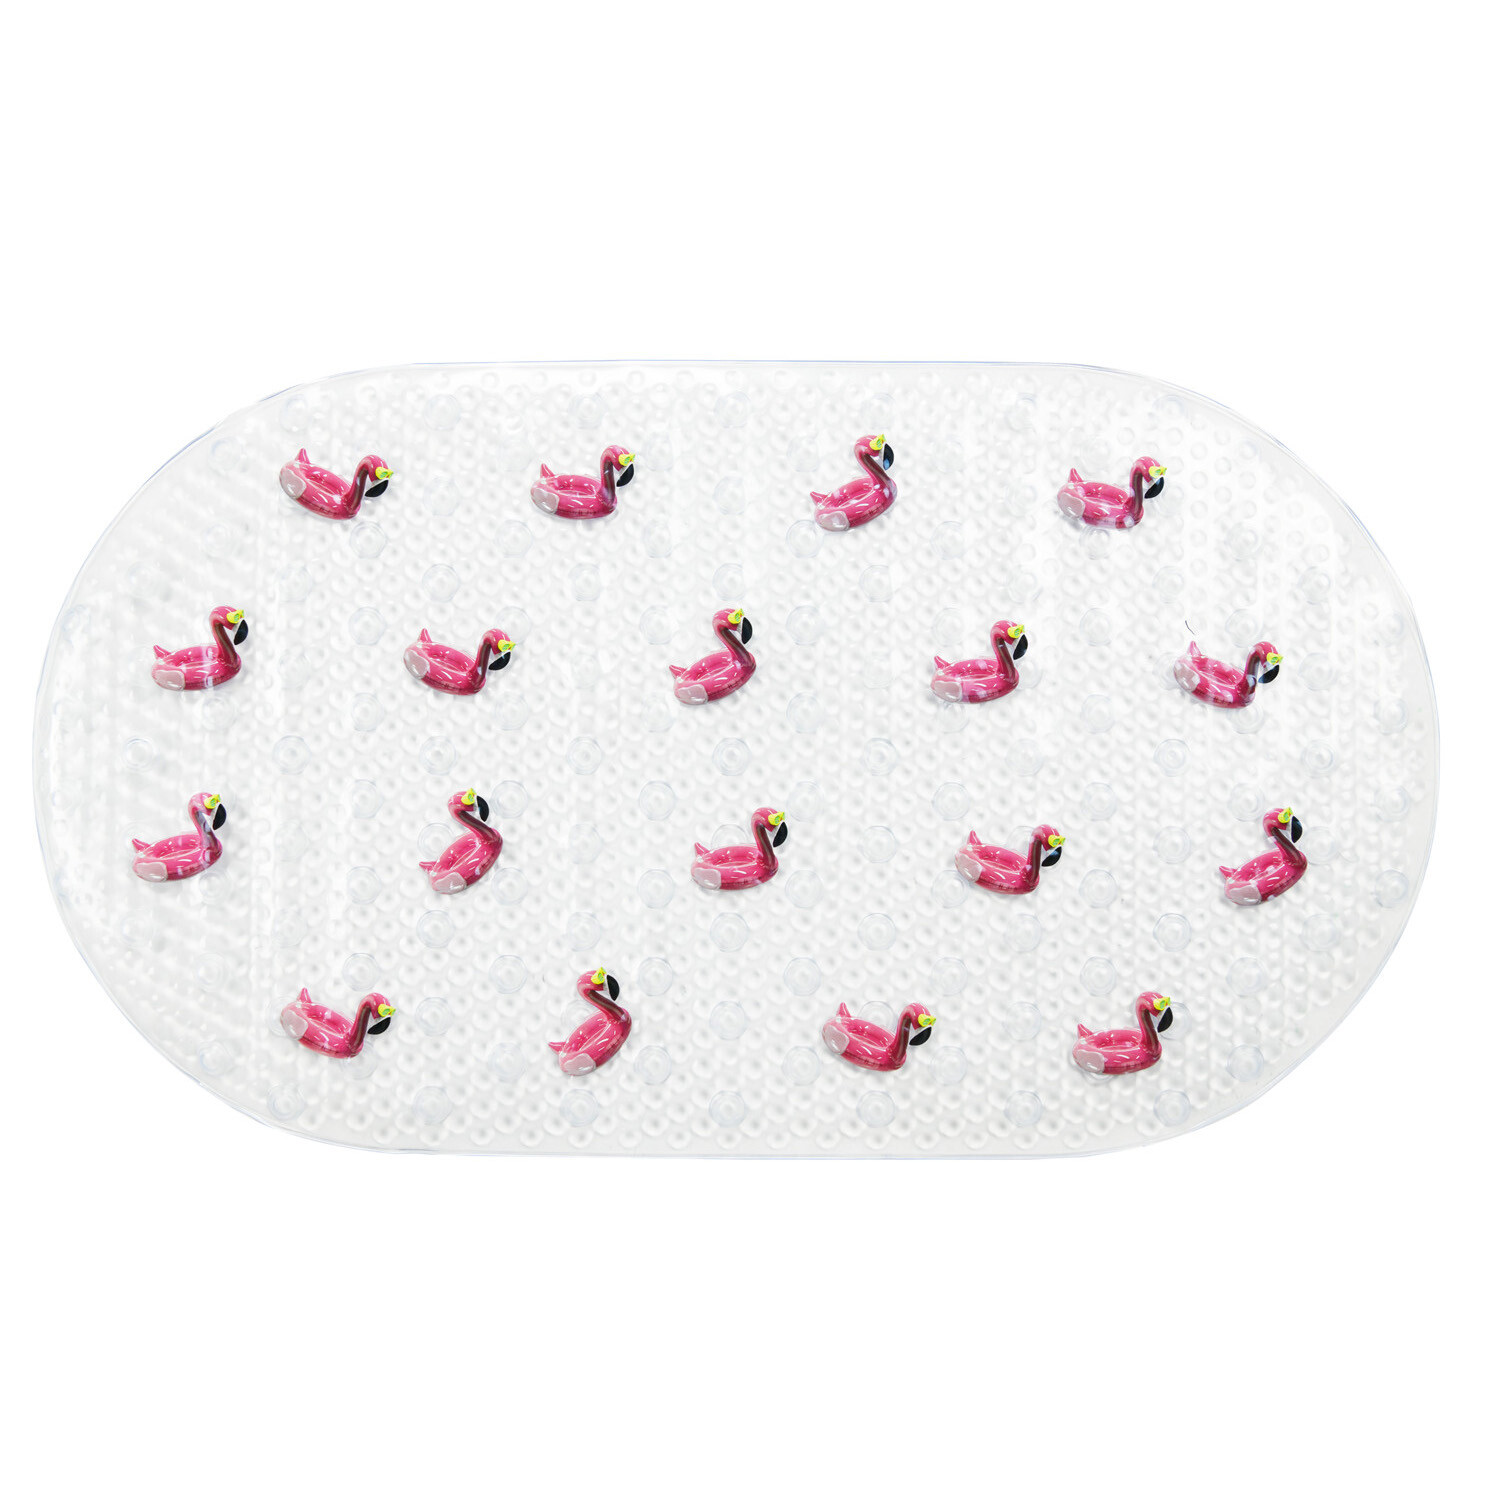 Flamingo PVC Bath Mat Image 1